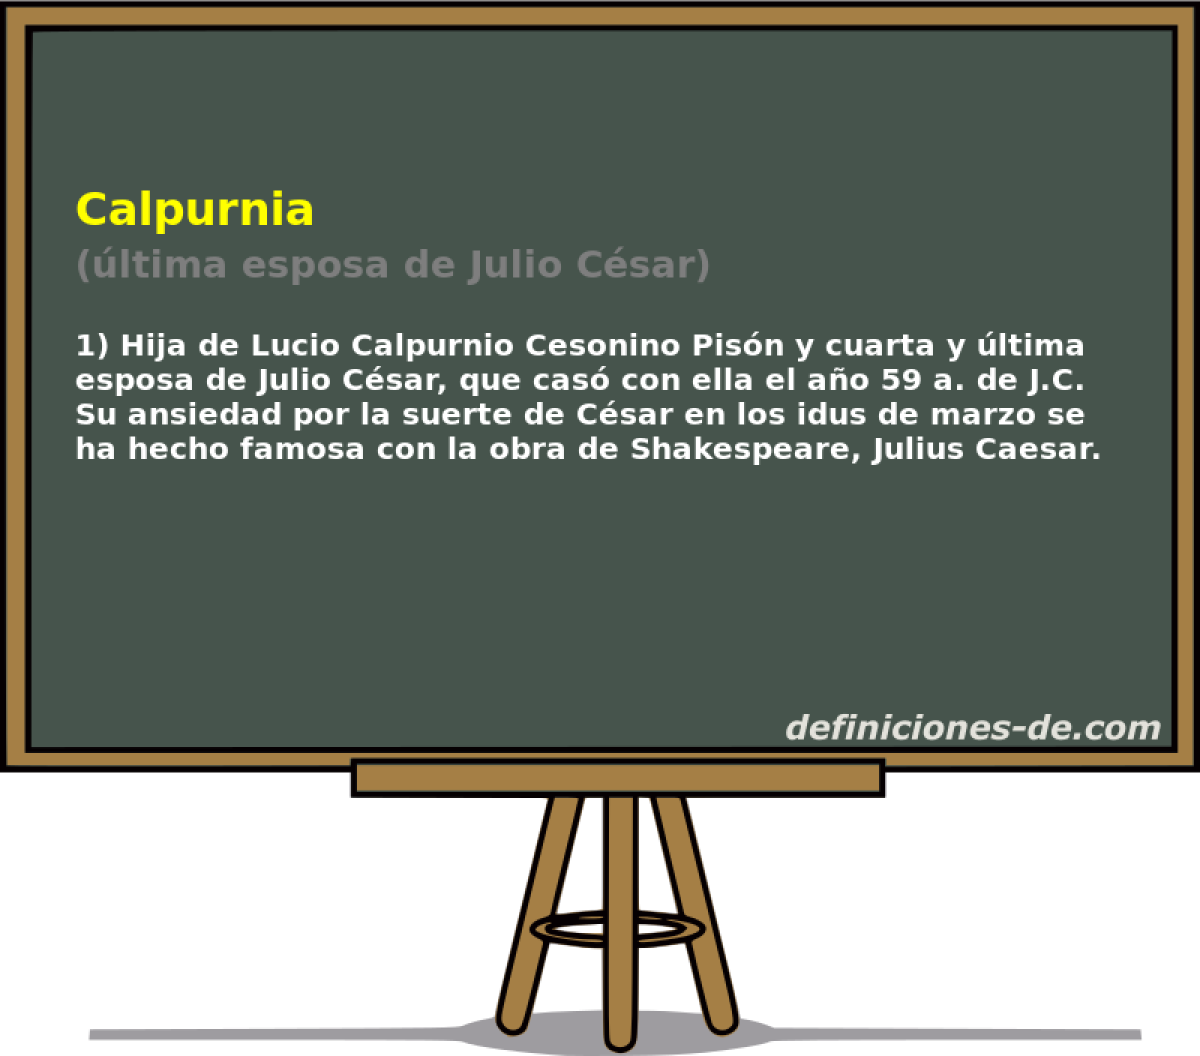 Calpurnia (ltima esposa de Julio Csar)